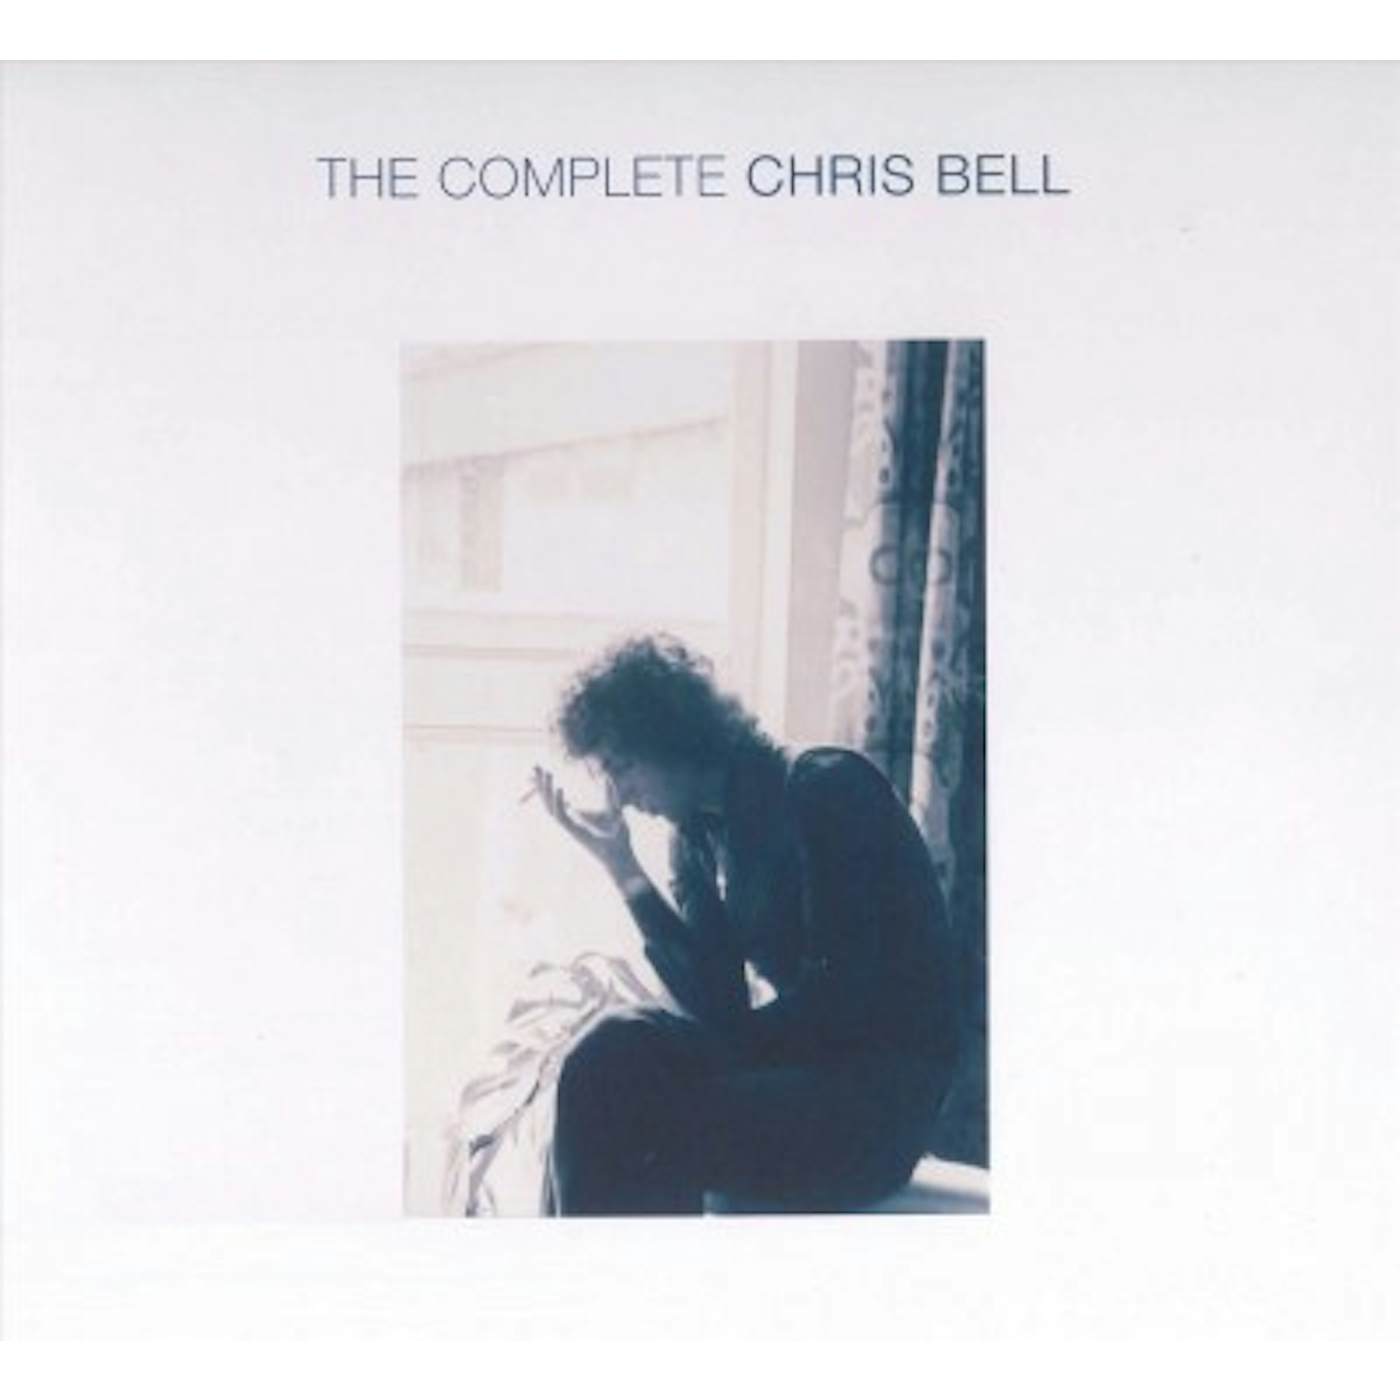 COMPLETE CHRIS BELL (6LP CLAM BOX) Vinyl Record